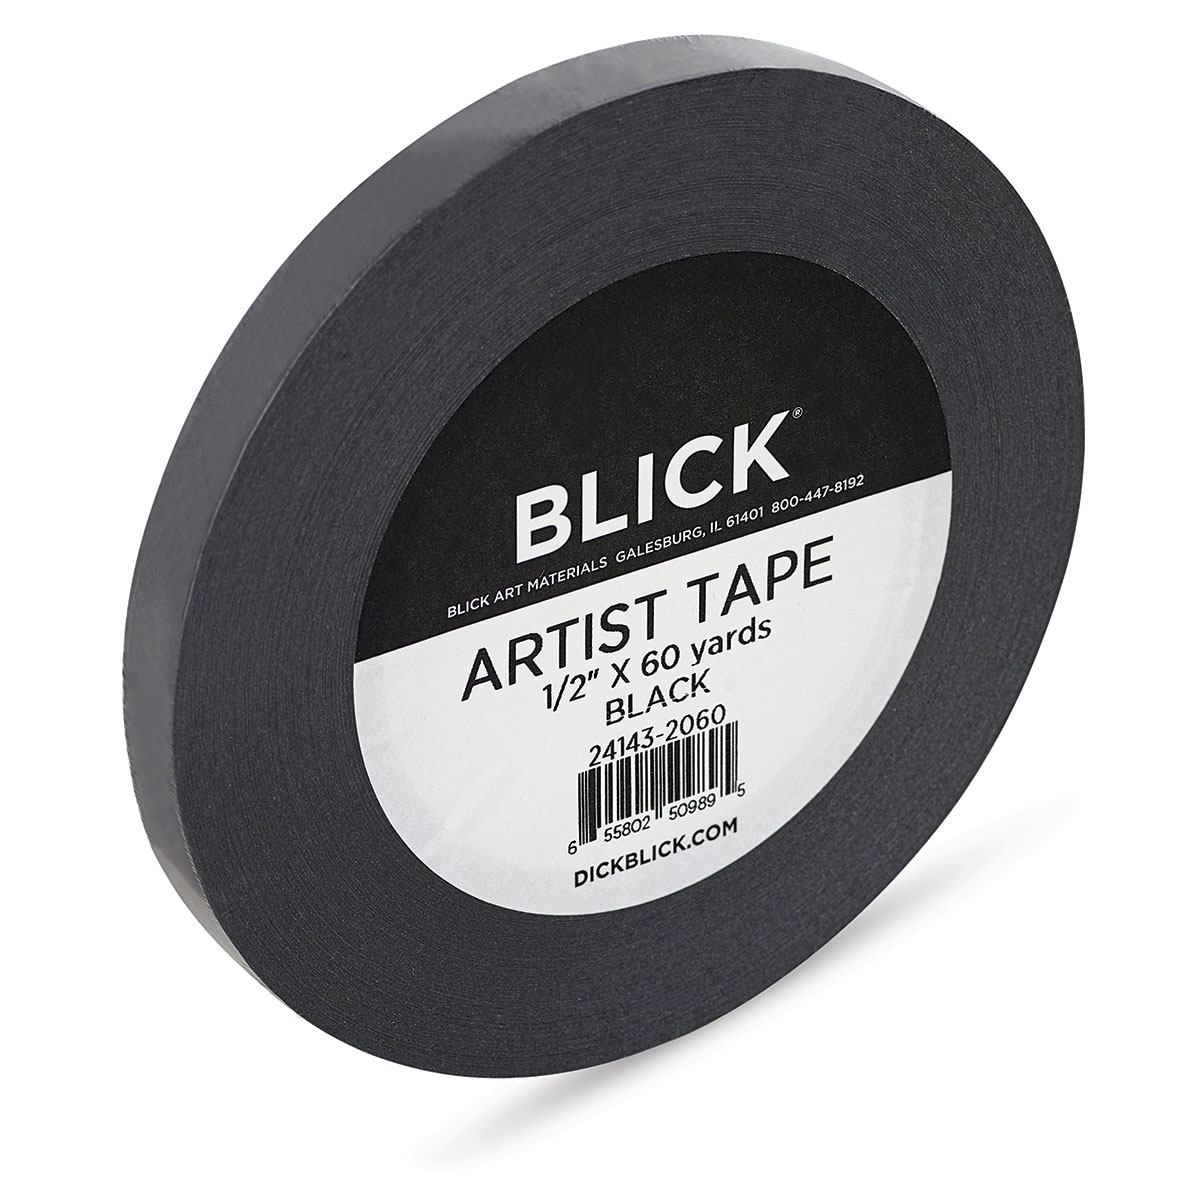 White Artist Tape - 1/2 x 60 Yards